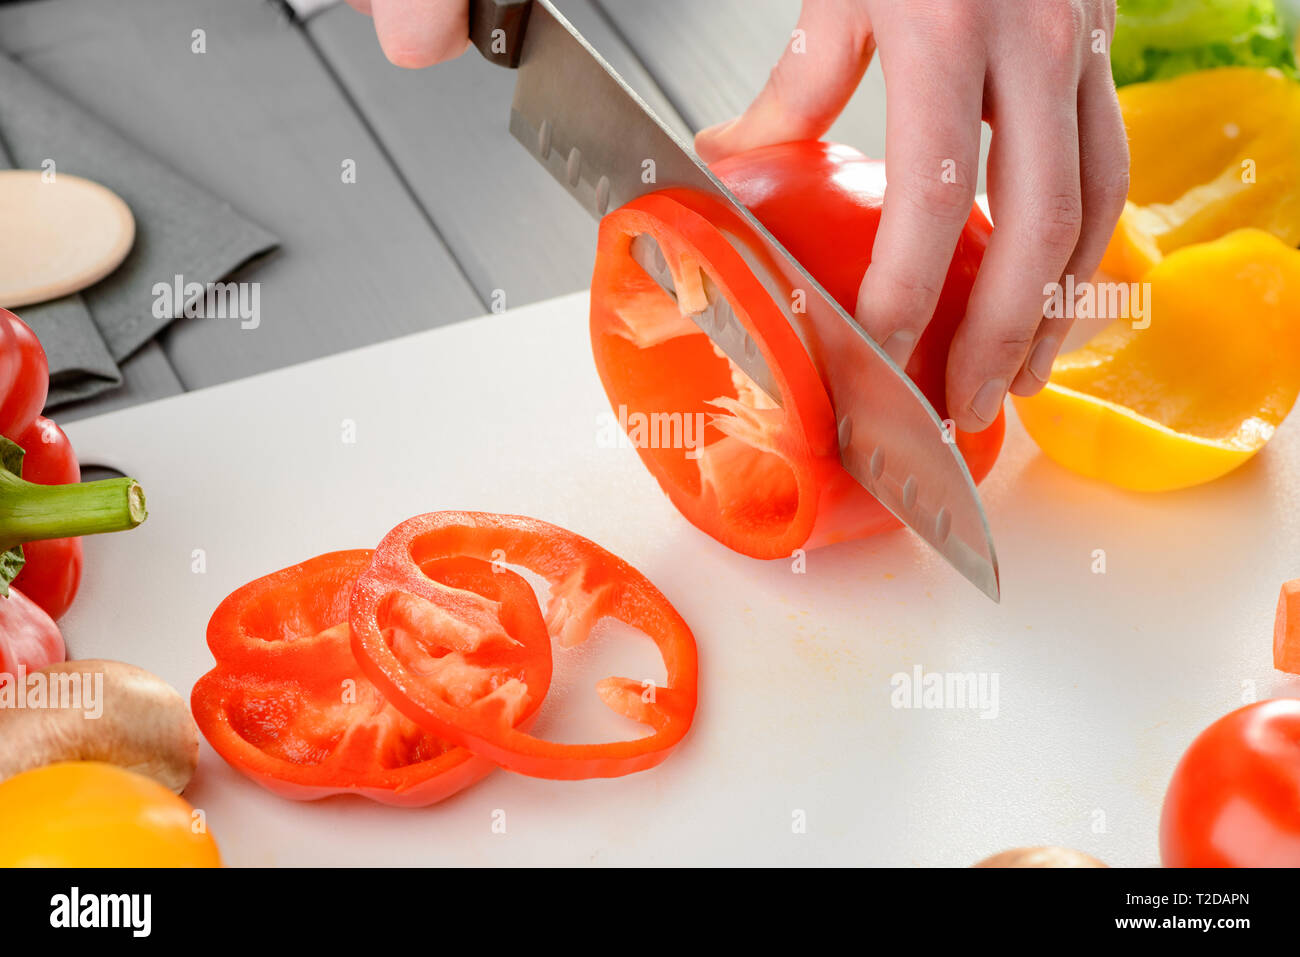 https://c8.alamy.com/comp/T2DAPN/cutting-bell-pepper-into-rings-men-using-a-sharp-santoku-knife-for-perfect-cut-cooking-vegetables-vegetarian-recipe-T2DAPN.jpg